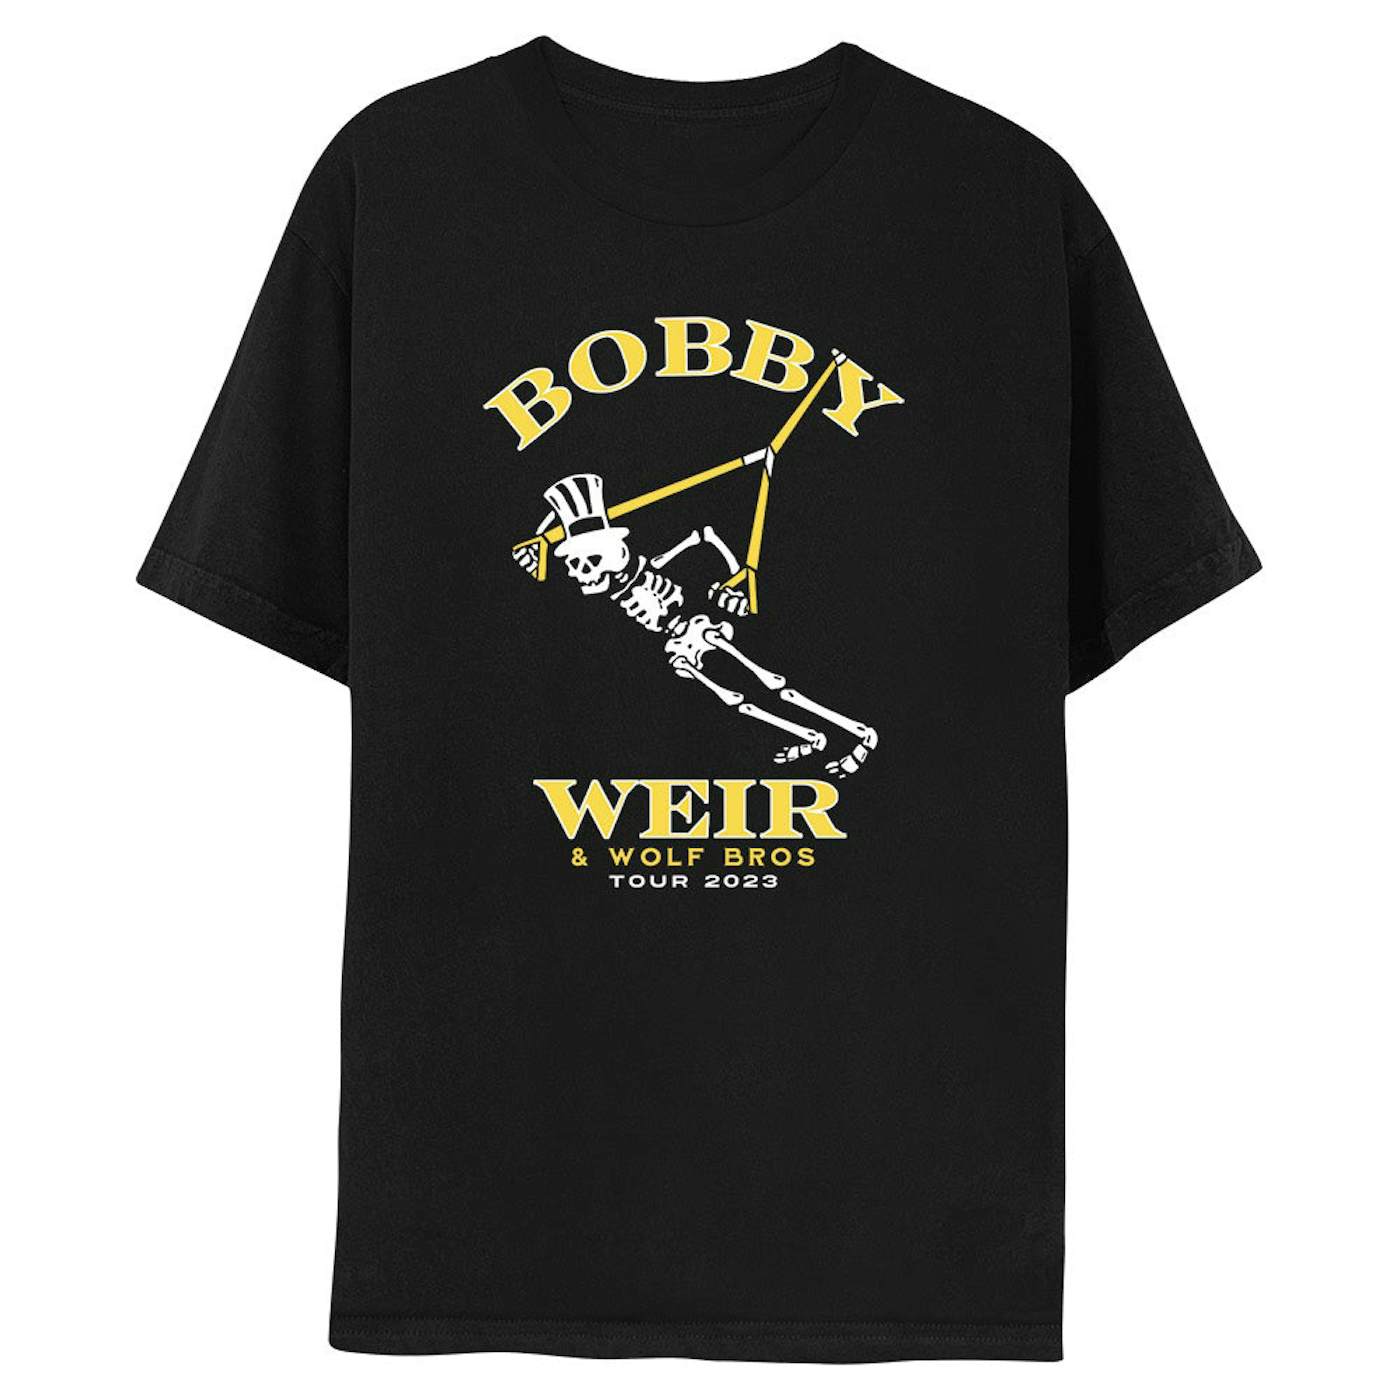 Bob Weir Bobby Weir & Wolf Bros 2023 Physical Tee